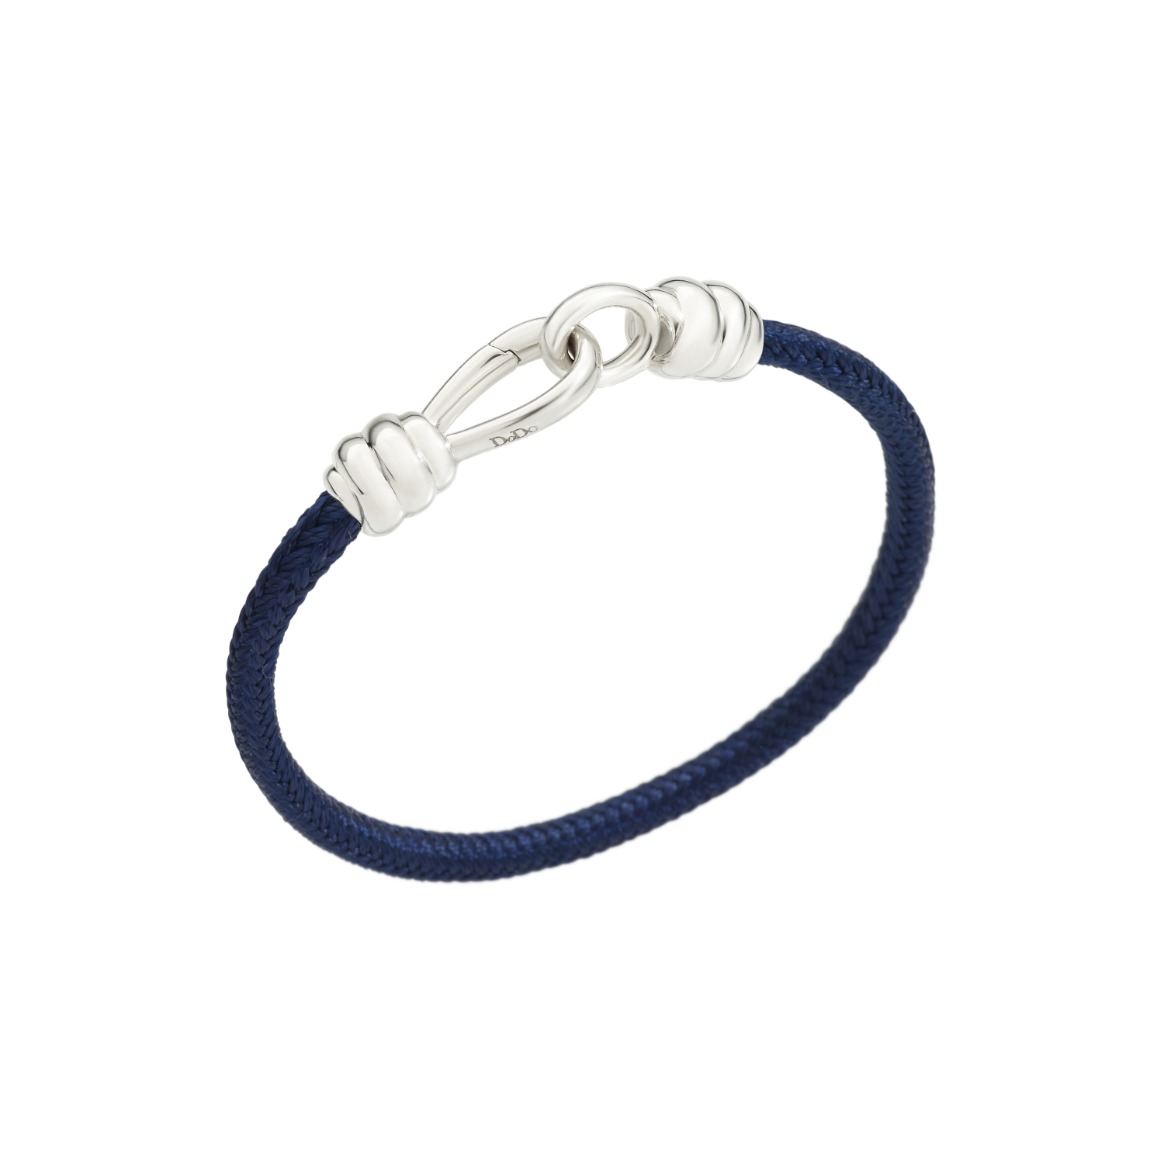 DBC2001_KNOT0_CBLAG_010_Dodo_nodo-bracelet-closure-925-silver-thick-cord-navy-blue-cotton.png